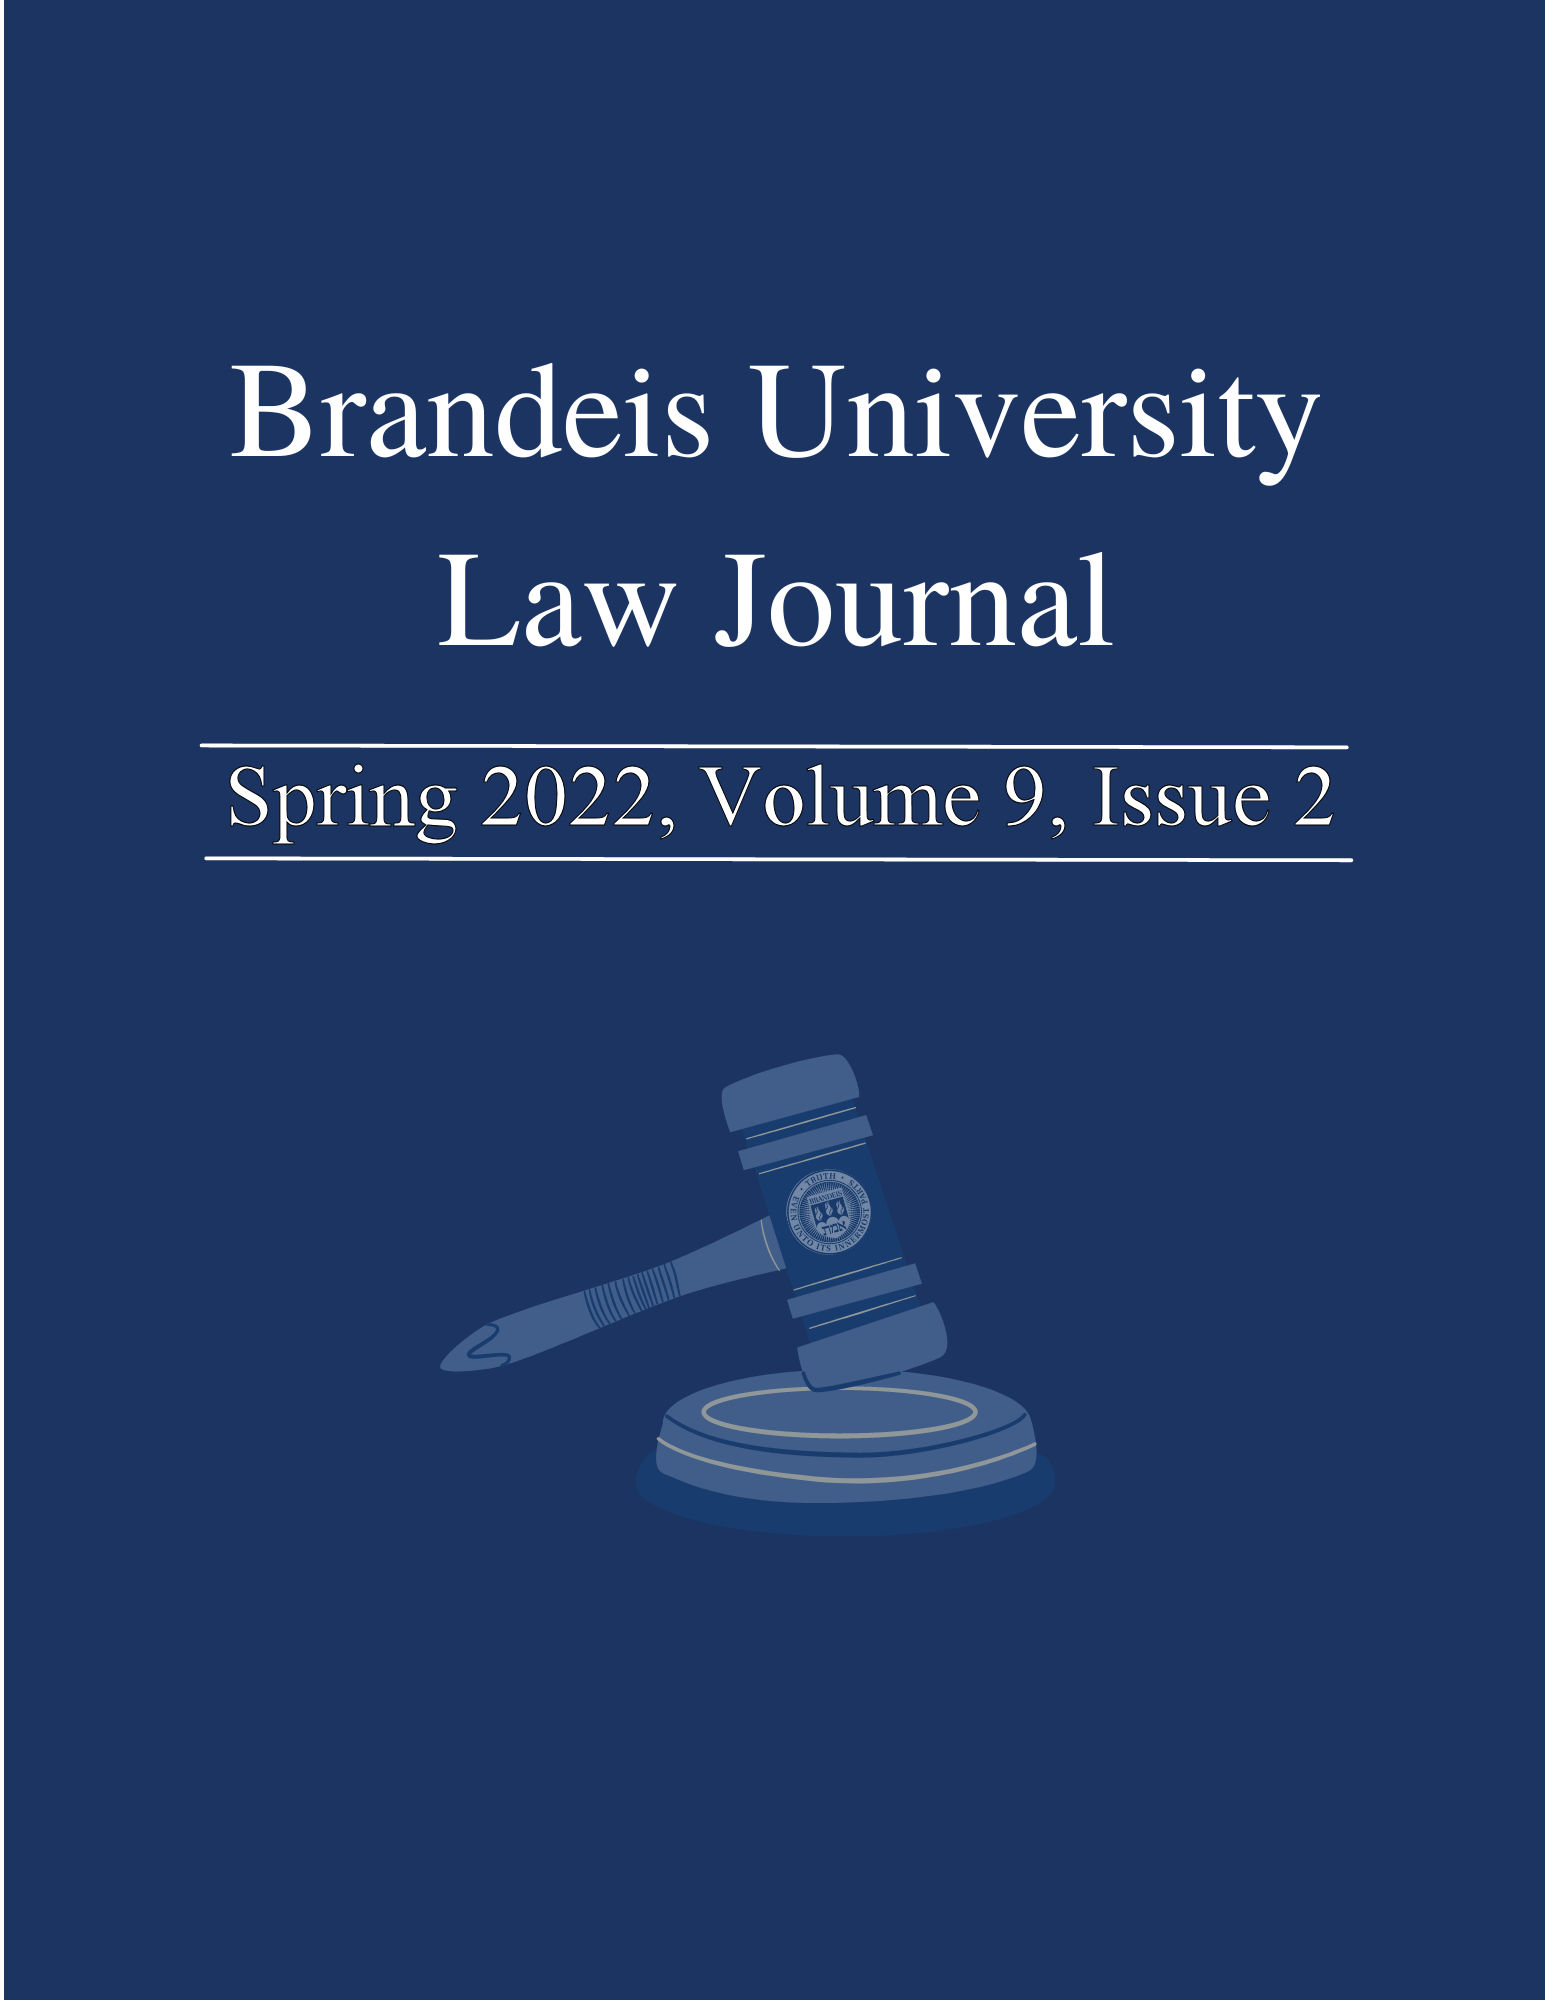 Brandeis University Law Journal cover art depicting a light gavel on a darker blue ground.